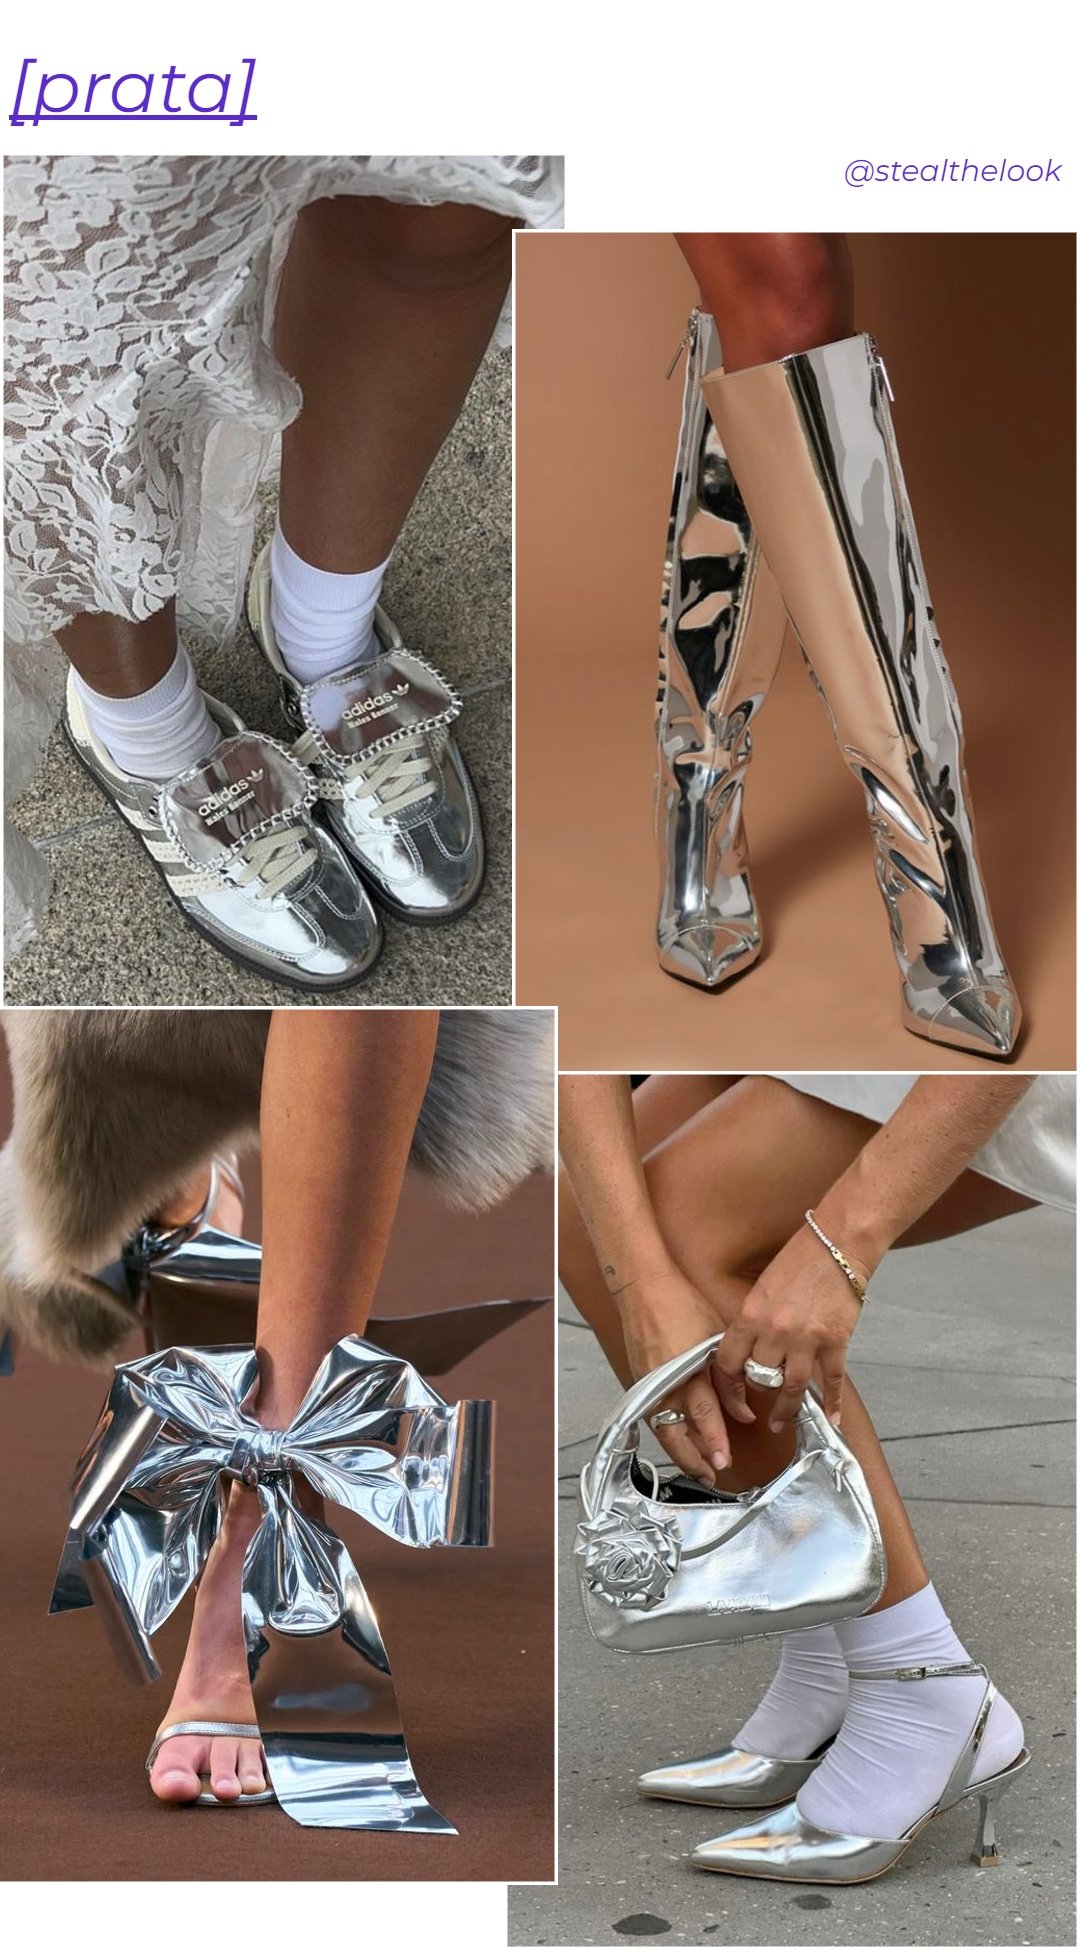 Prata - sapato - cores de sapato - tendência - street style - https://stealthelook.com.br